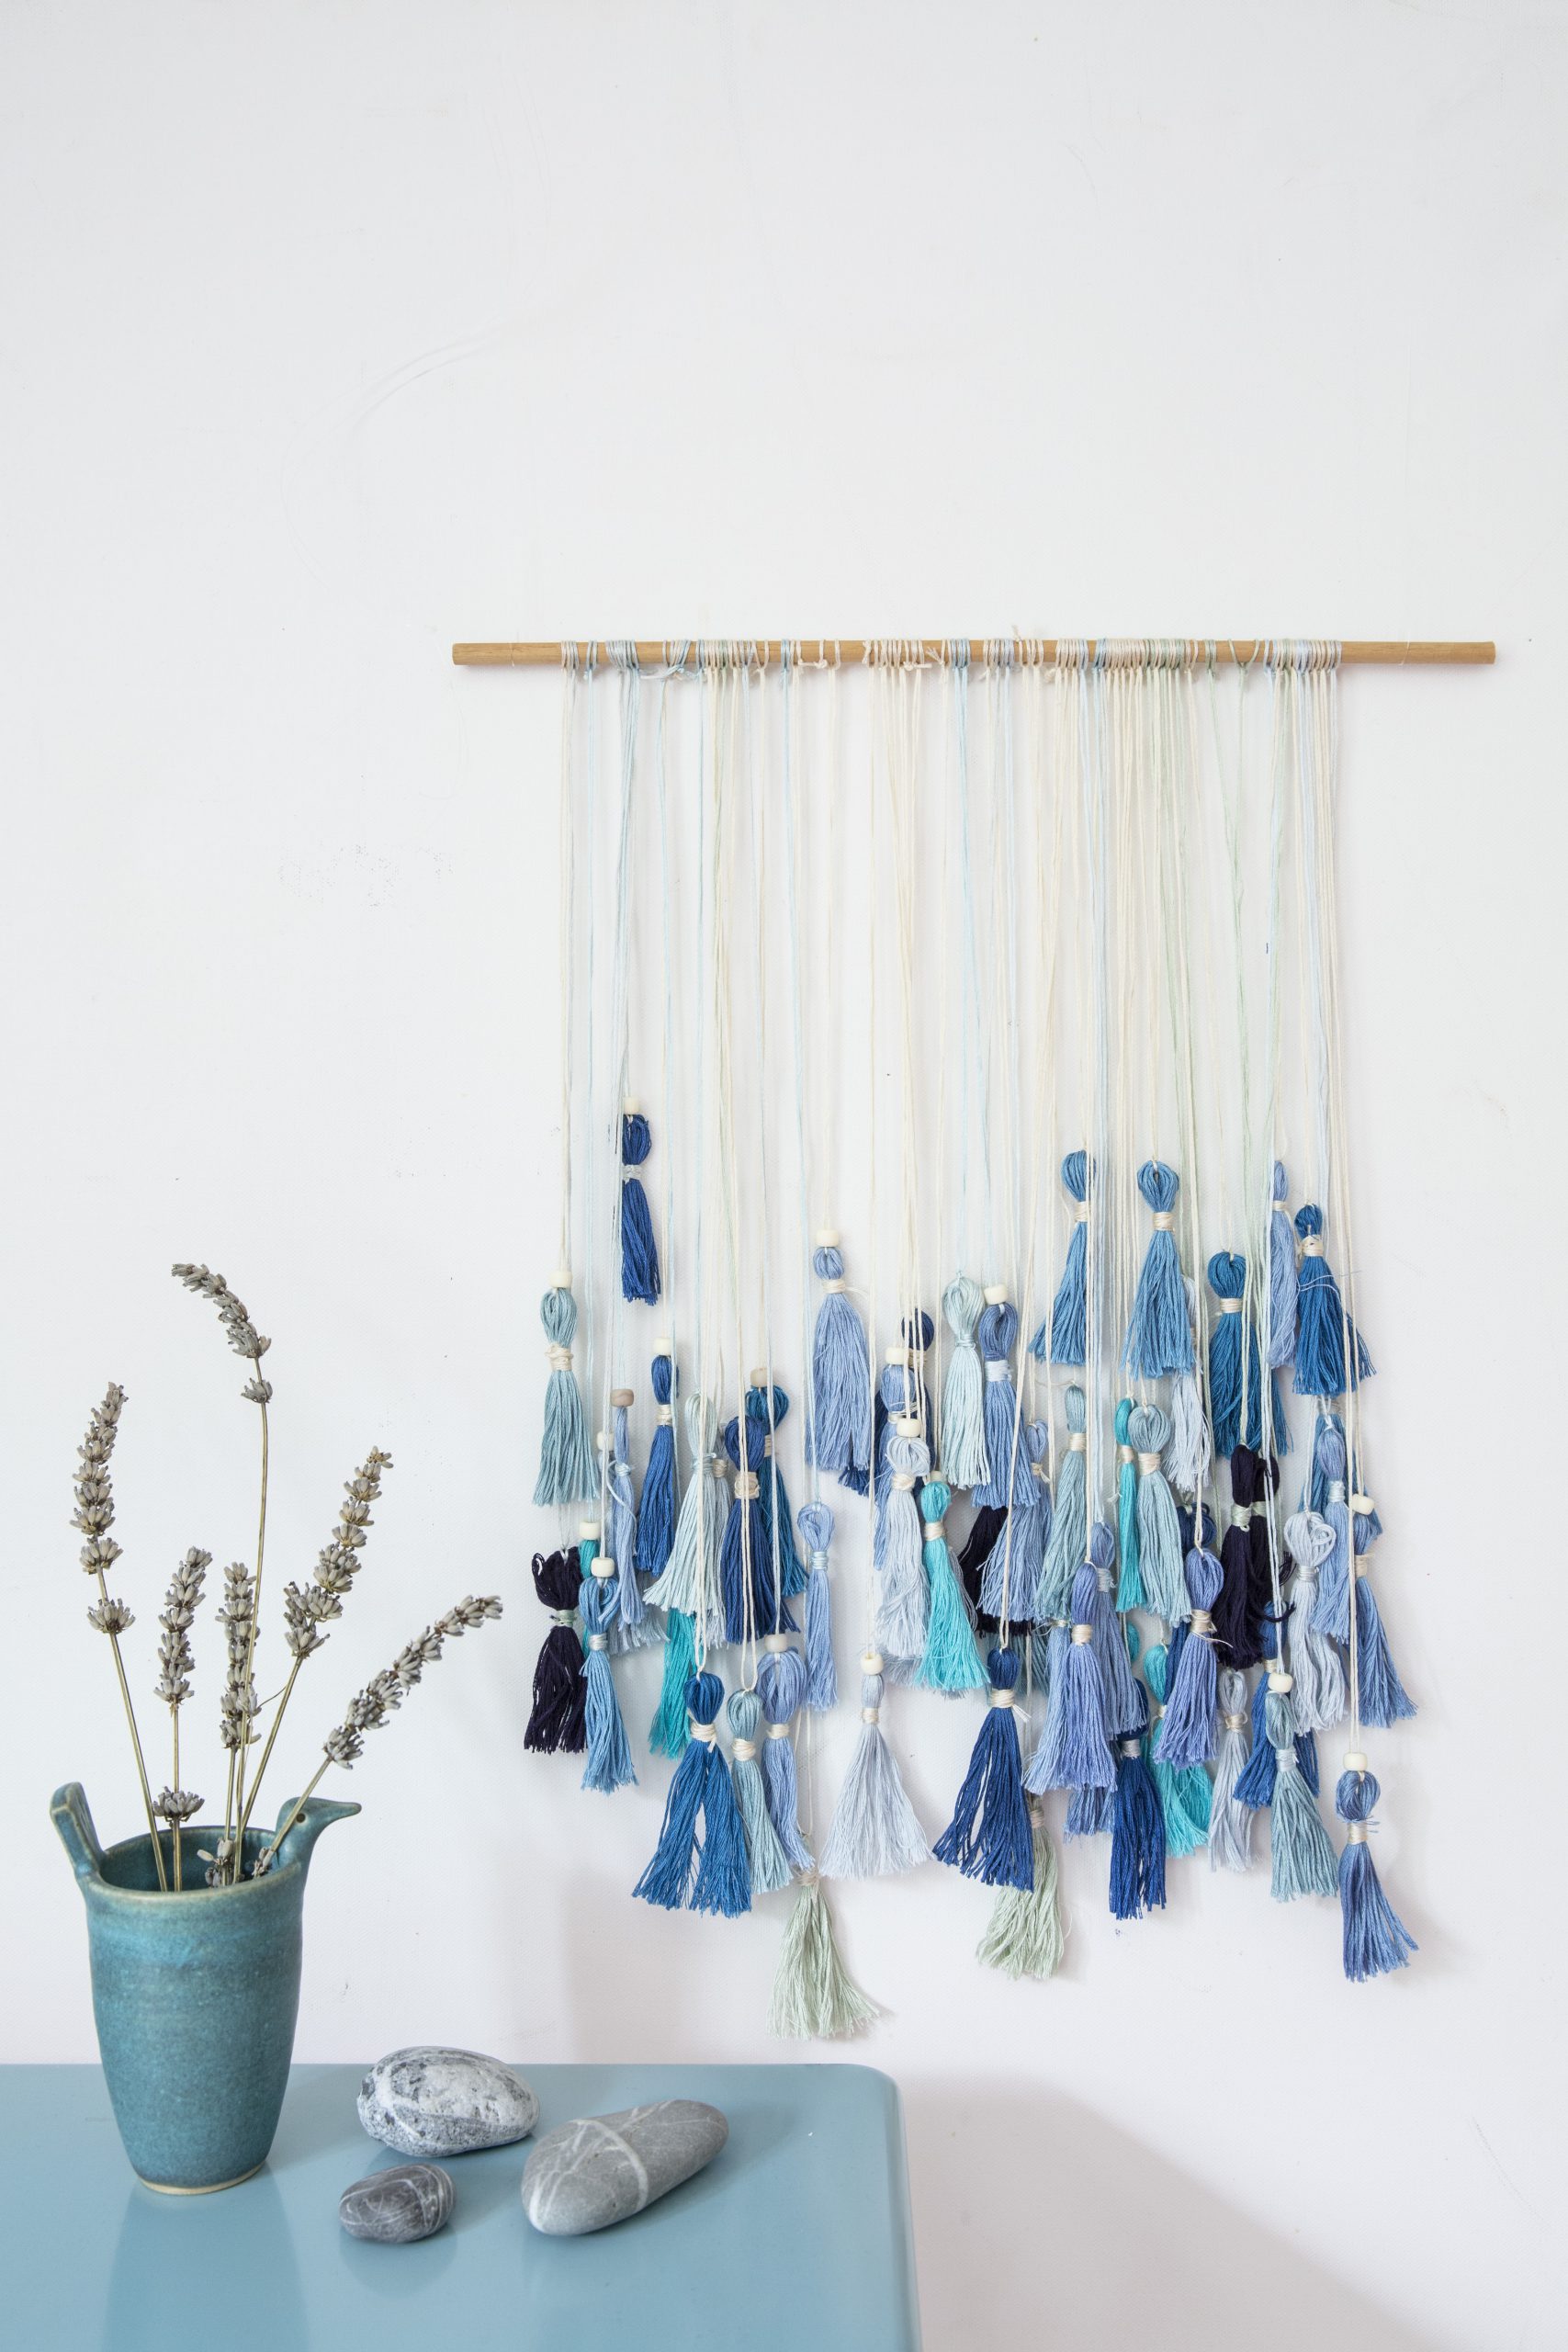 Tassel Tassels Diy Keychain Making Hanging Clasp Jewelry Craft